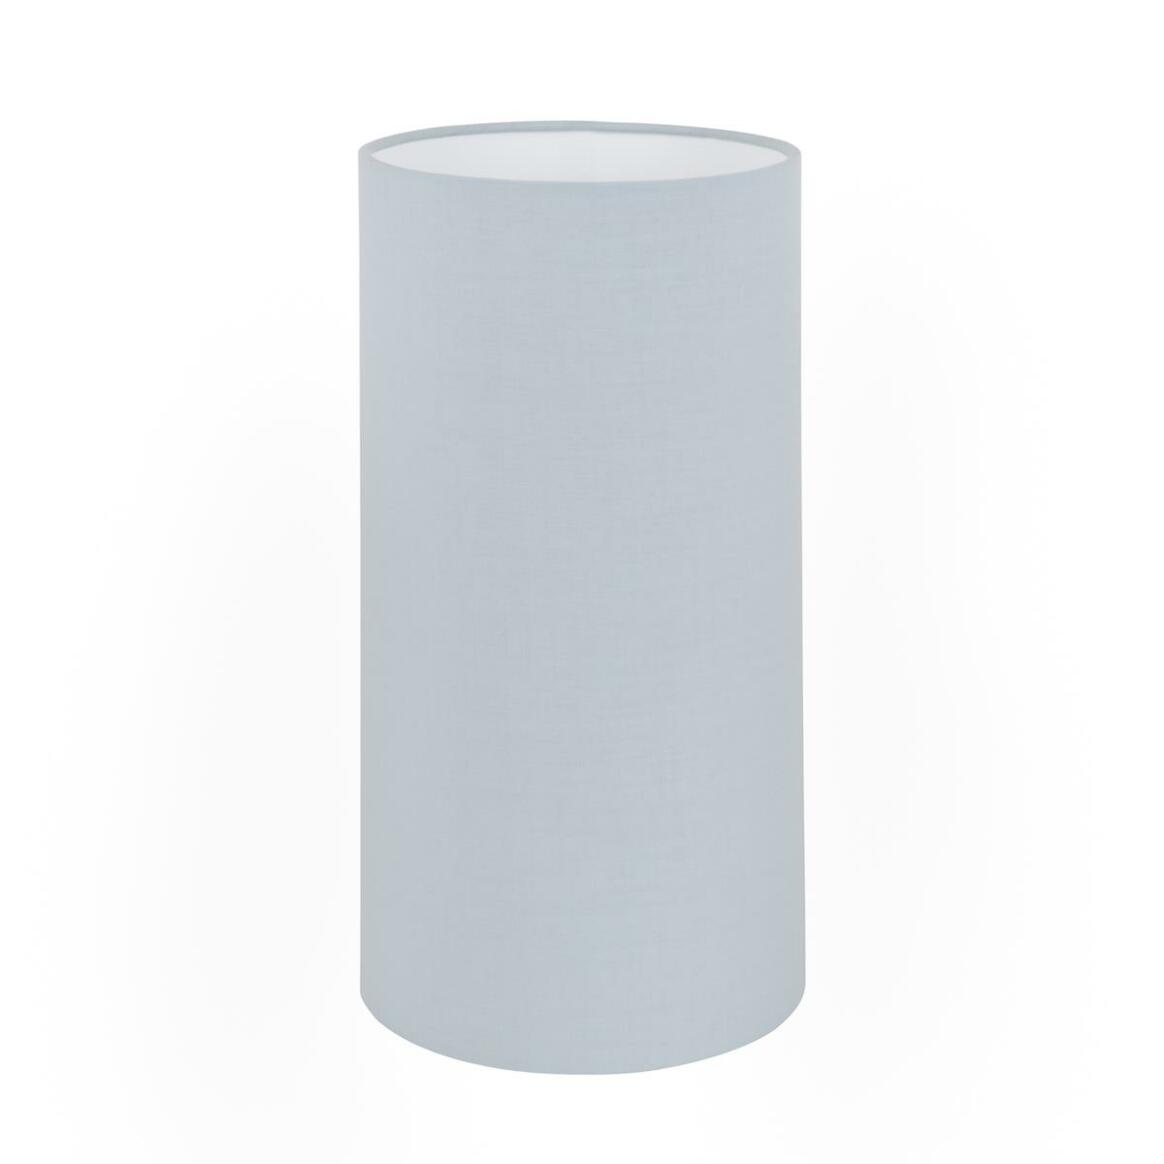 Cylinder fabric lamp shade 30cm main product image